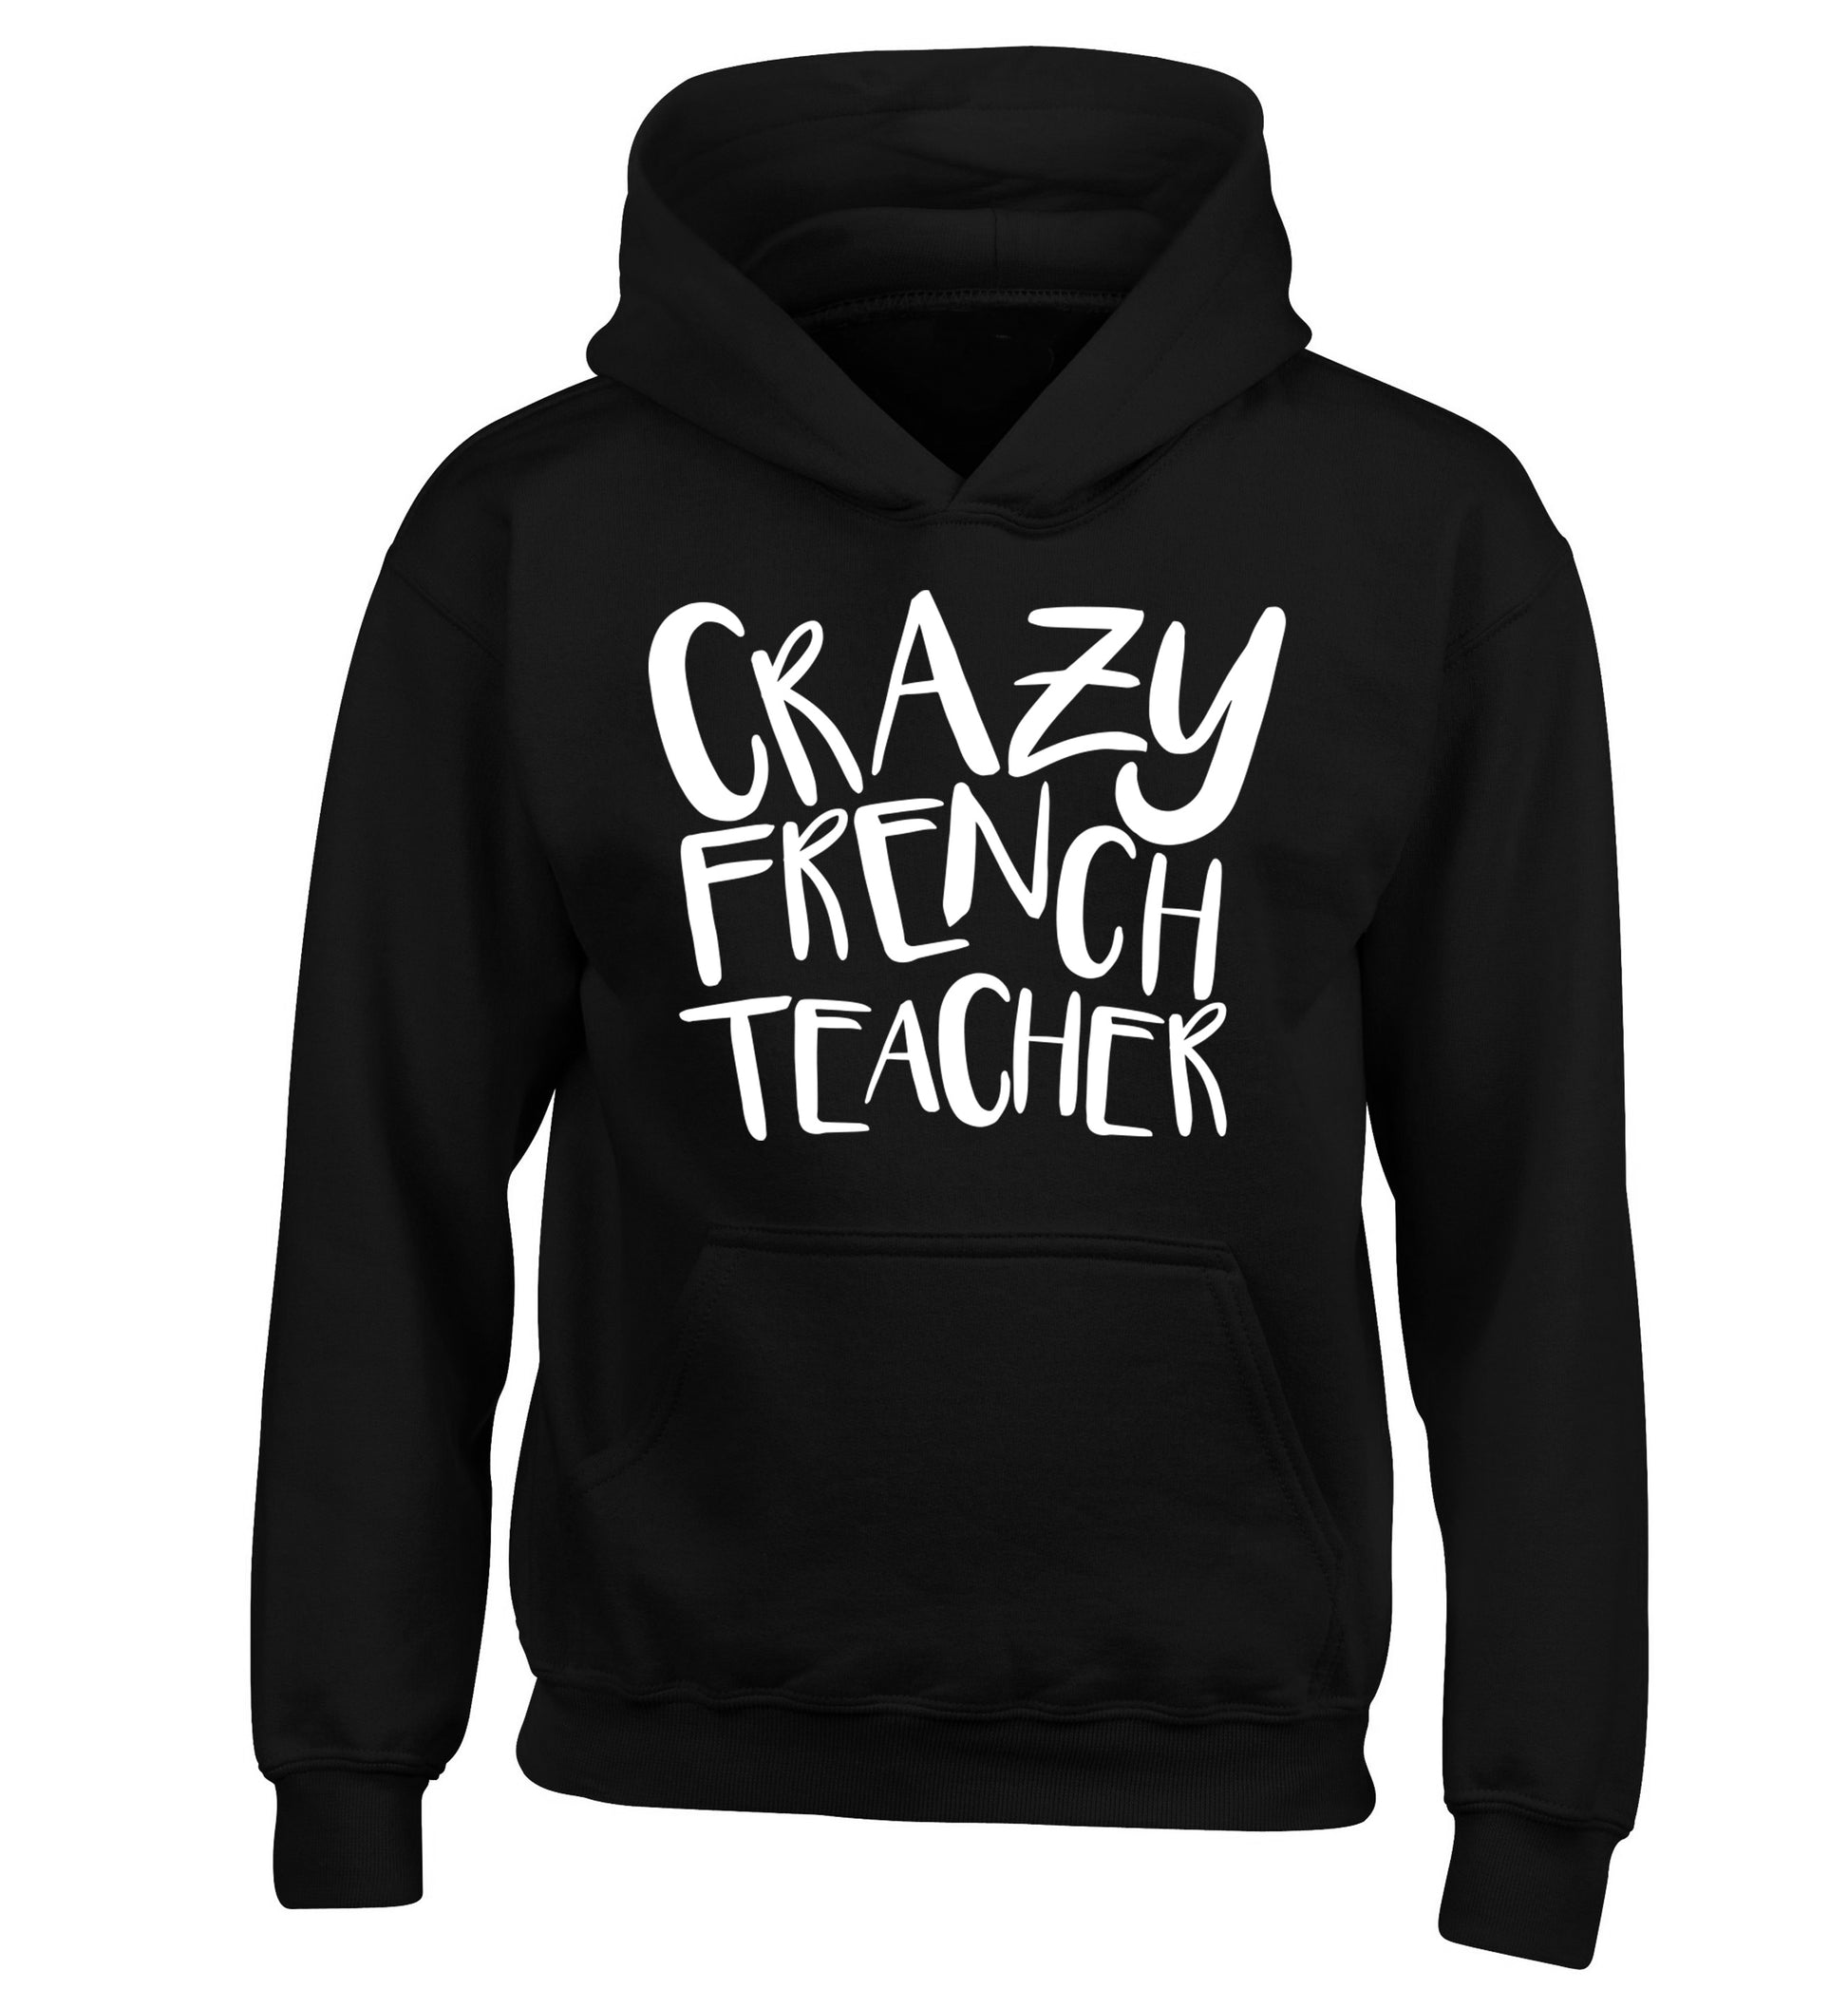 Crazy french teacher children's black hoodie 12-13 Years